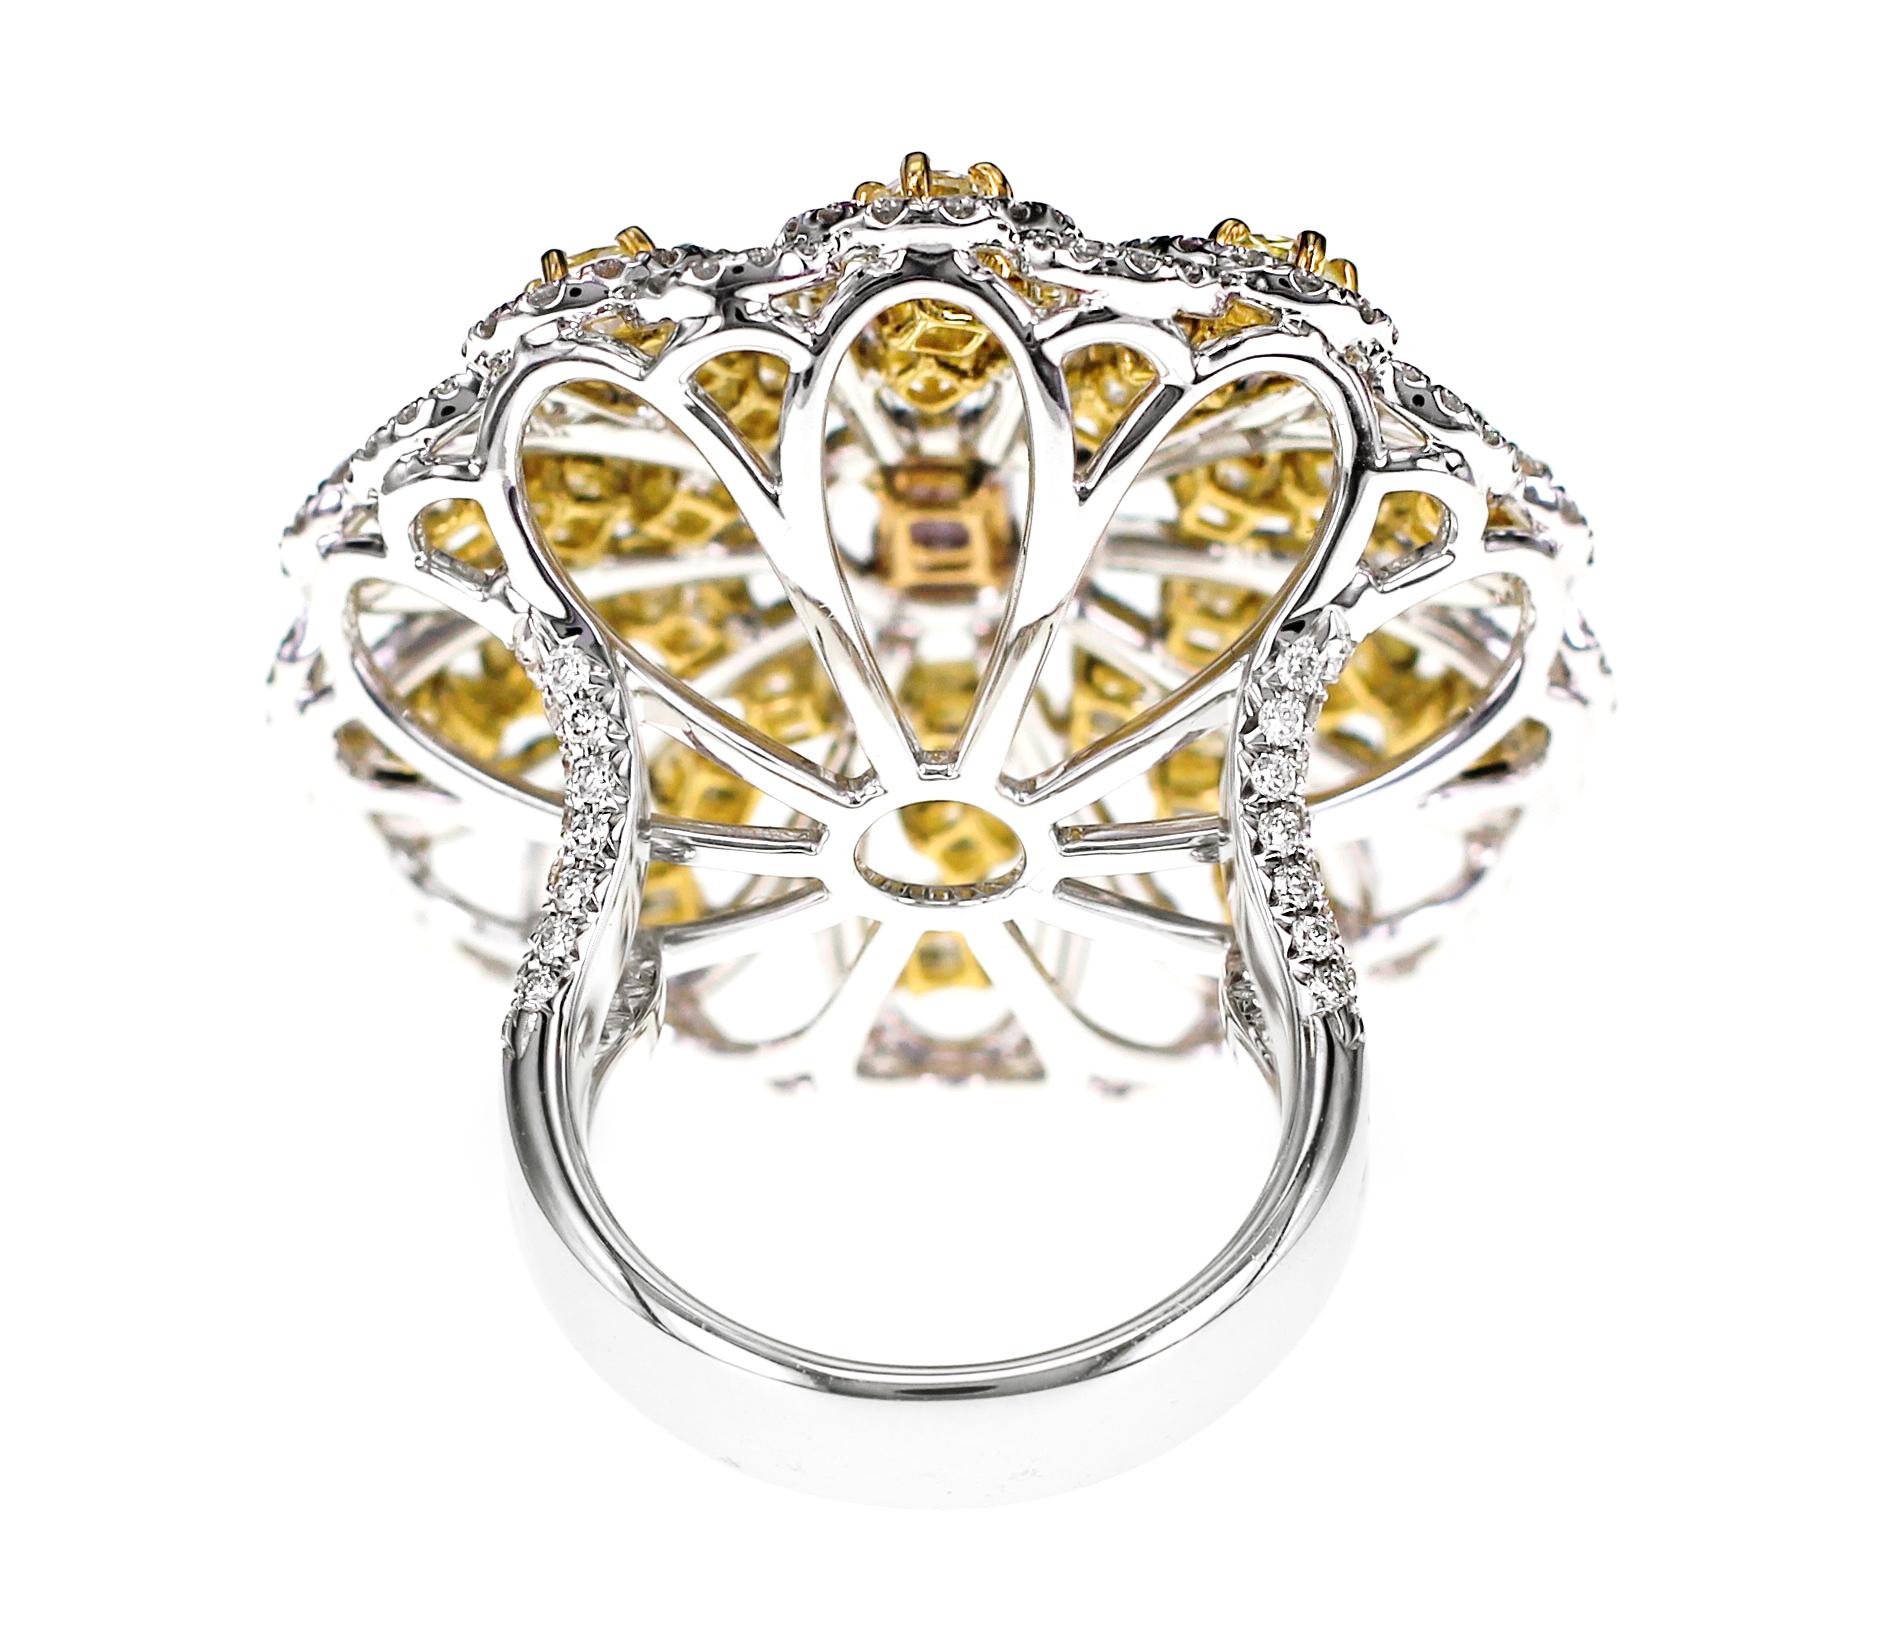 Art Nouveau 0.40 Carat Intense Pink Diamond and Intense Yellow Diamond Cocktail Ring